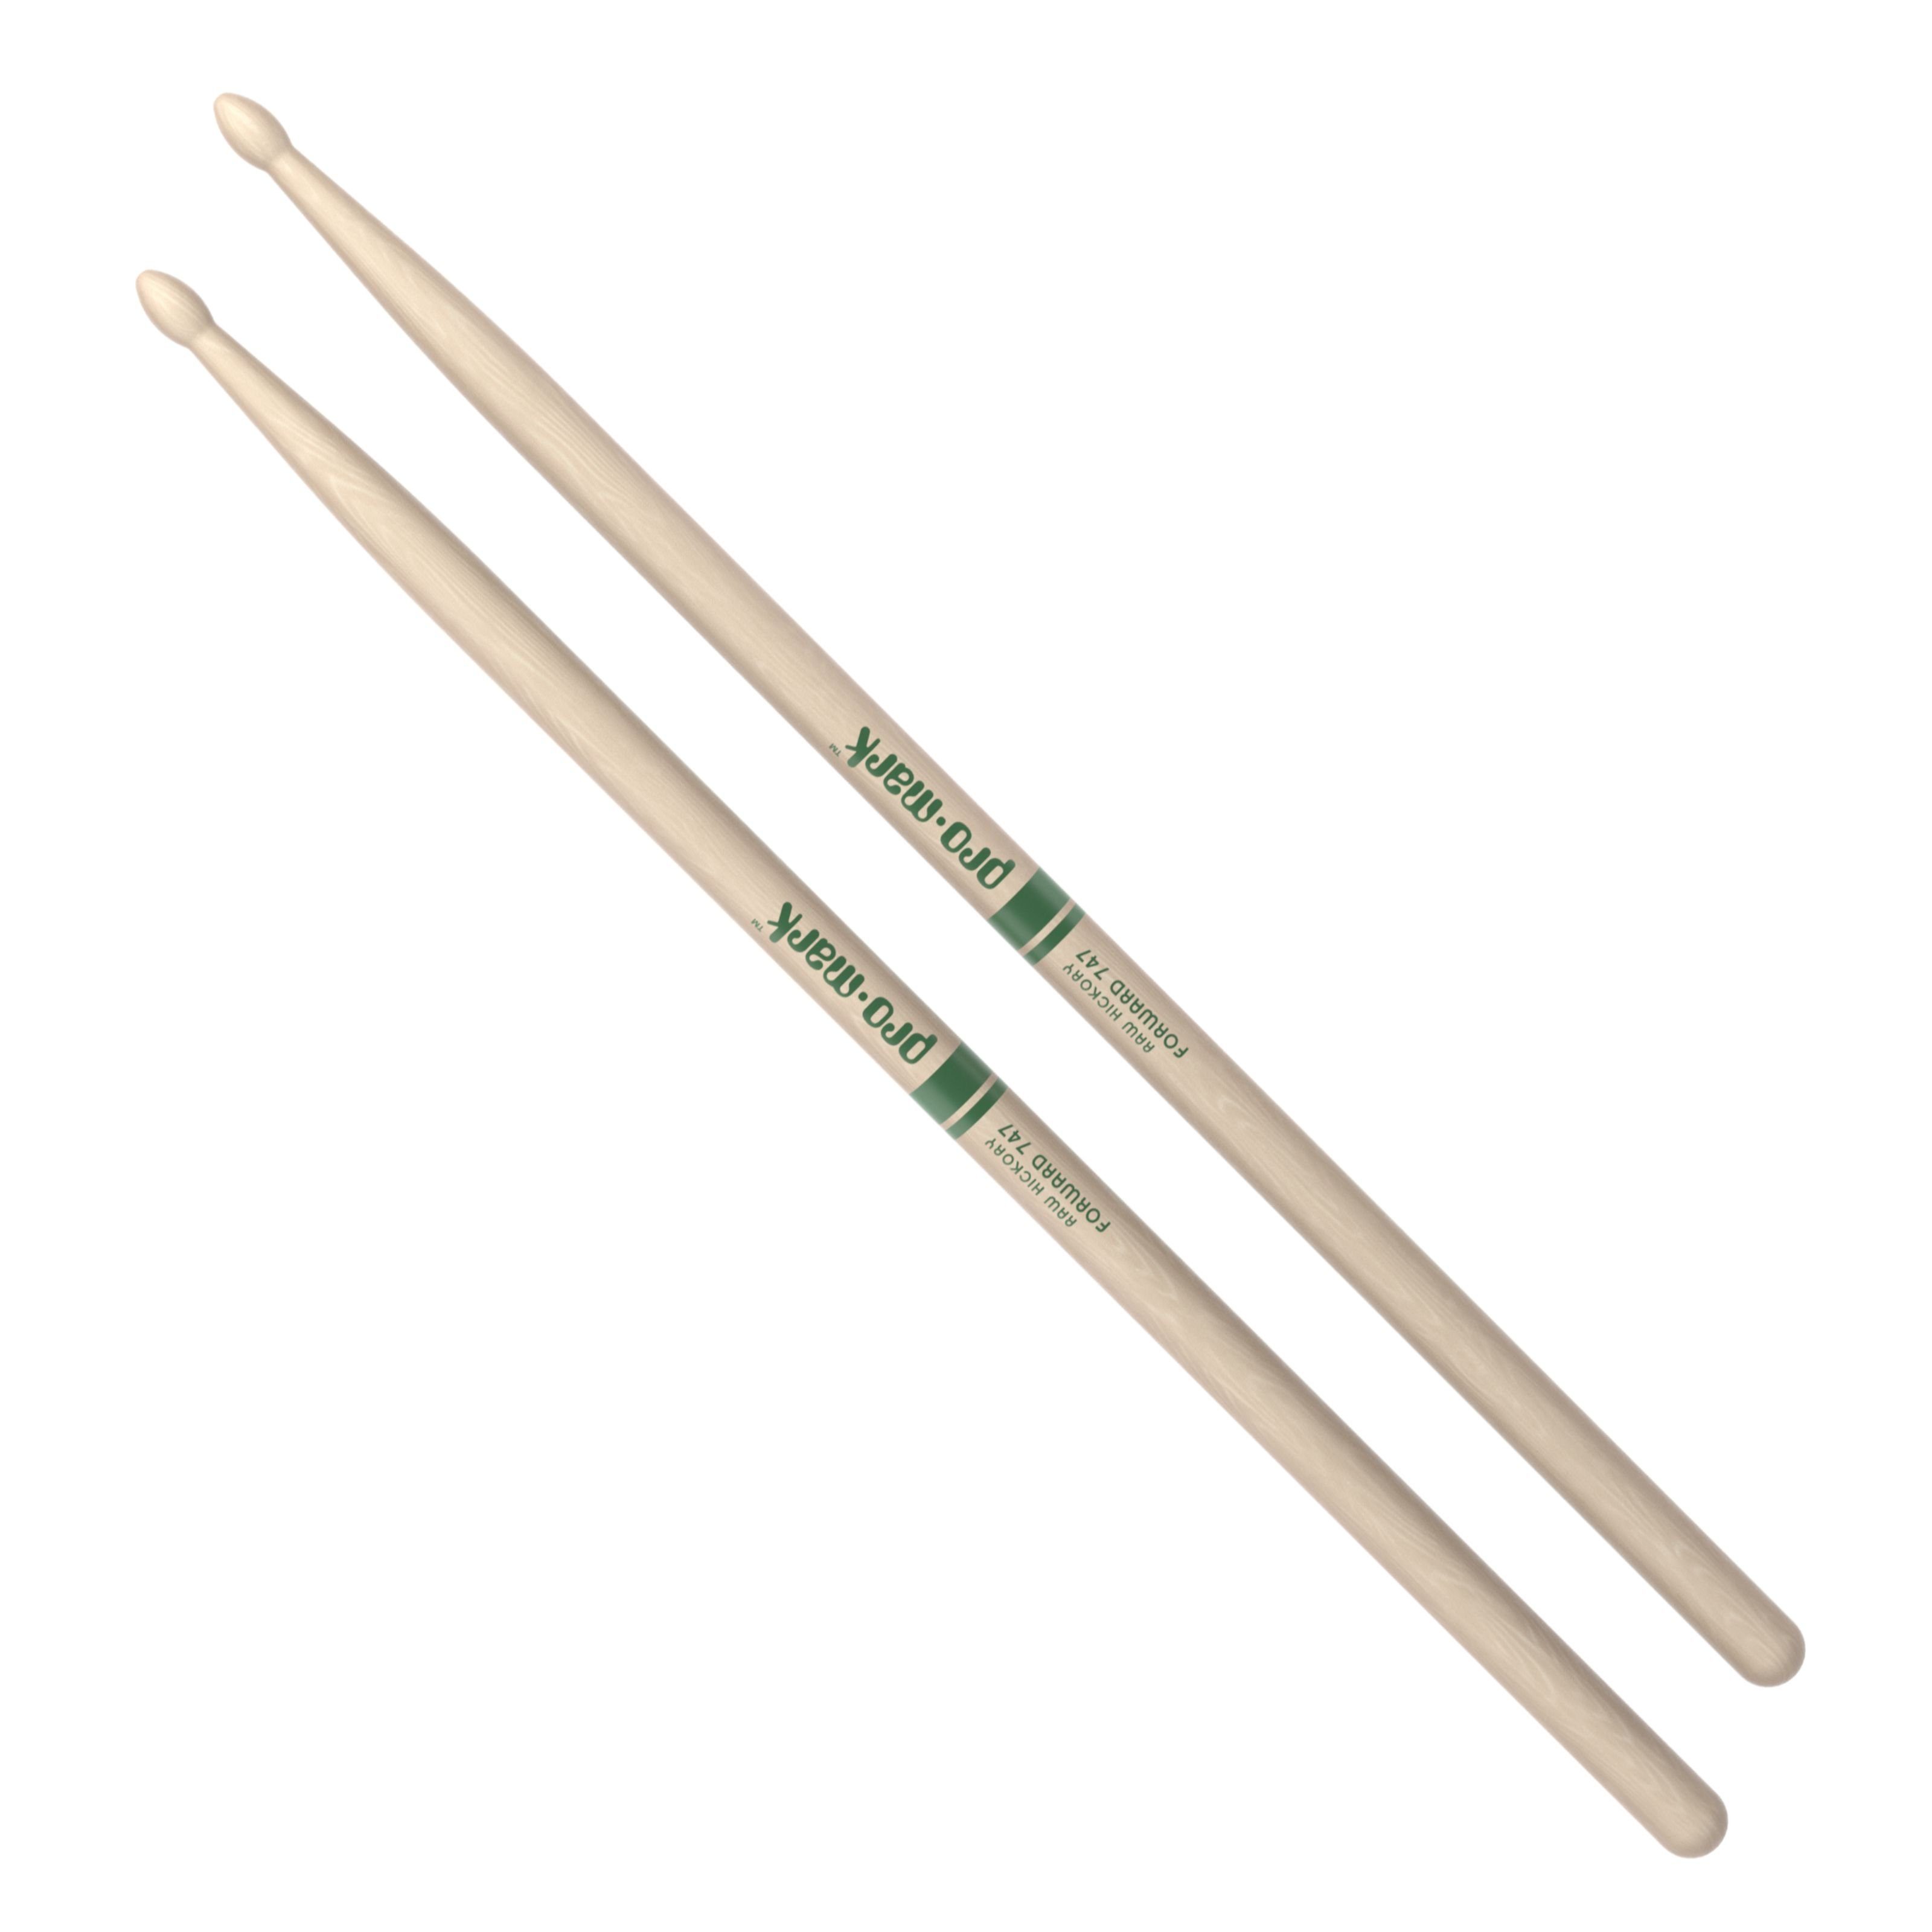 TXR747W - WoodTip Promark Natural Hickory, Paar Rock Drumstic Sticks, American Sticks Spielzeug-Musikinstrument,